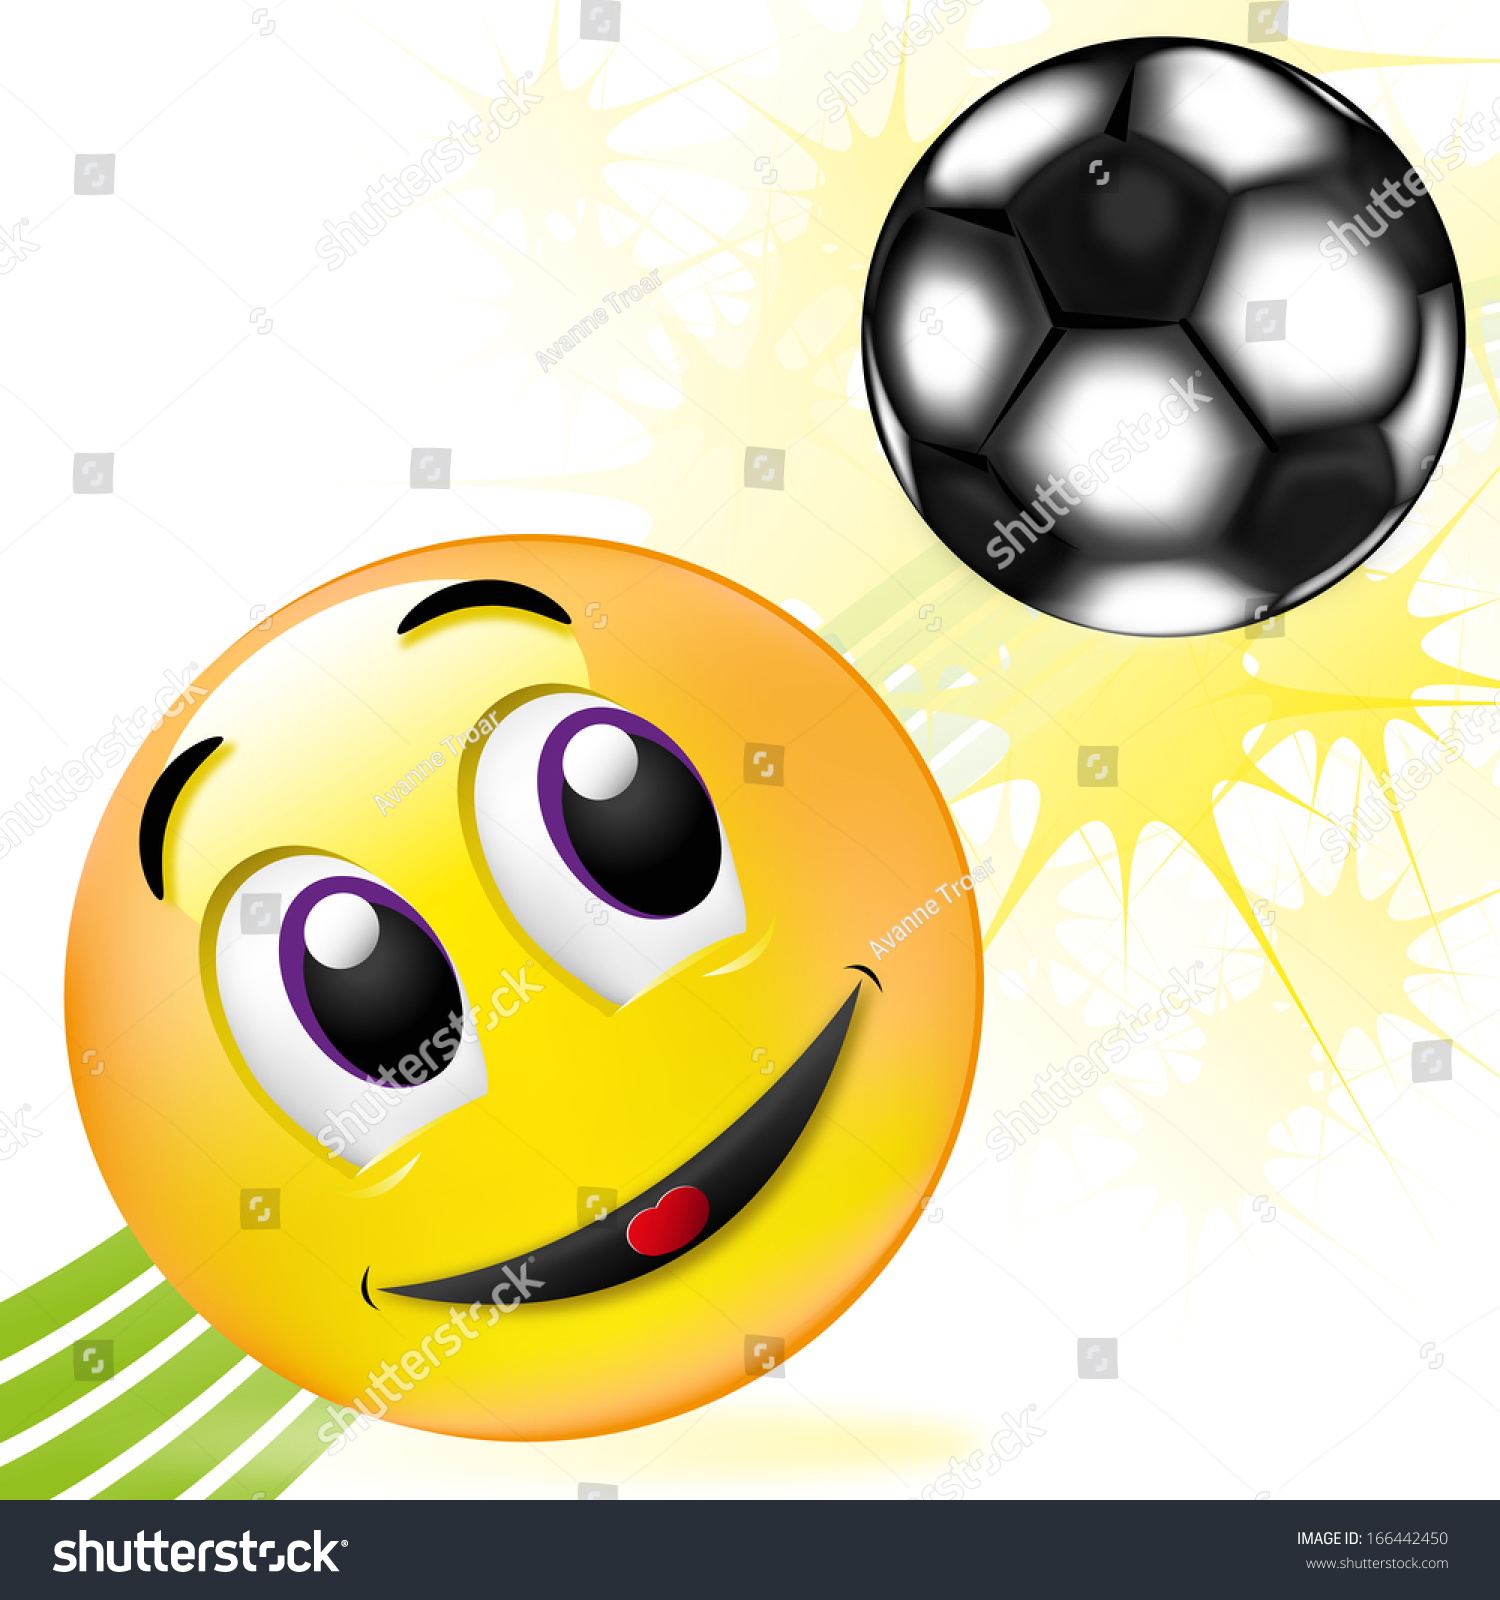 Smiley Plays Football Stock Illustration 166442450 - Shutterstock